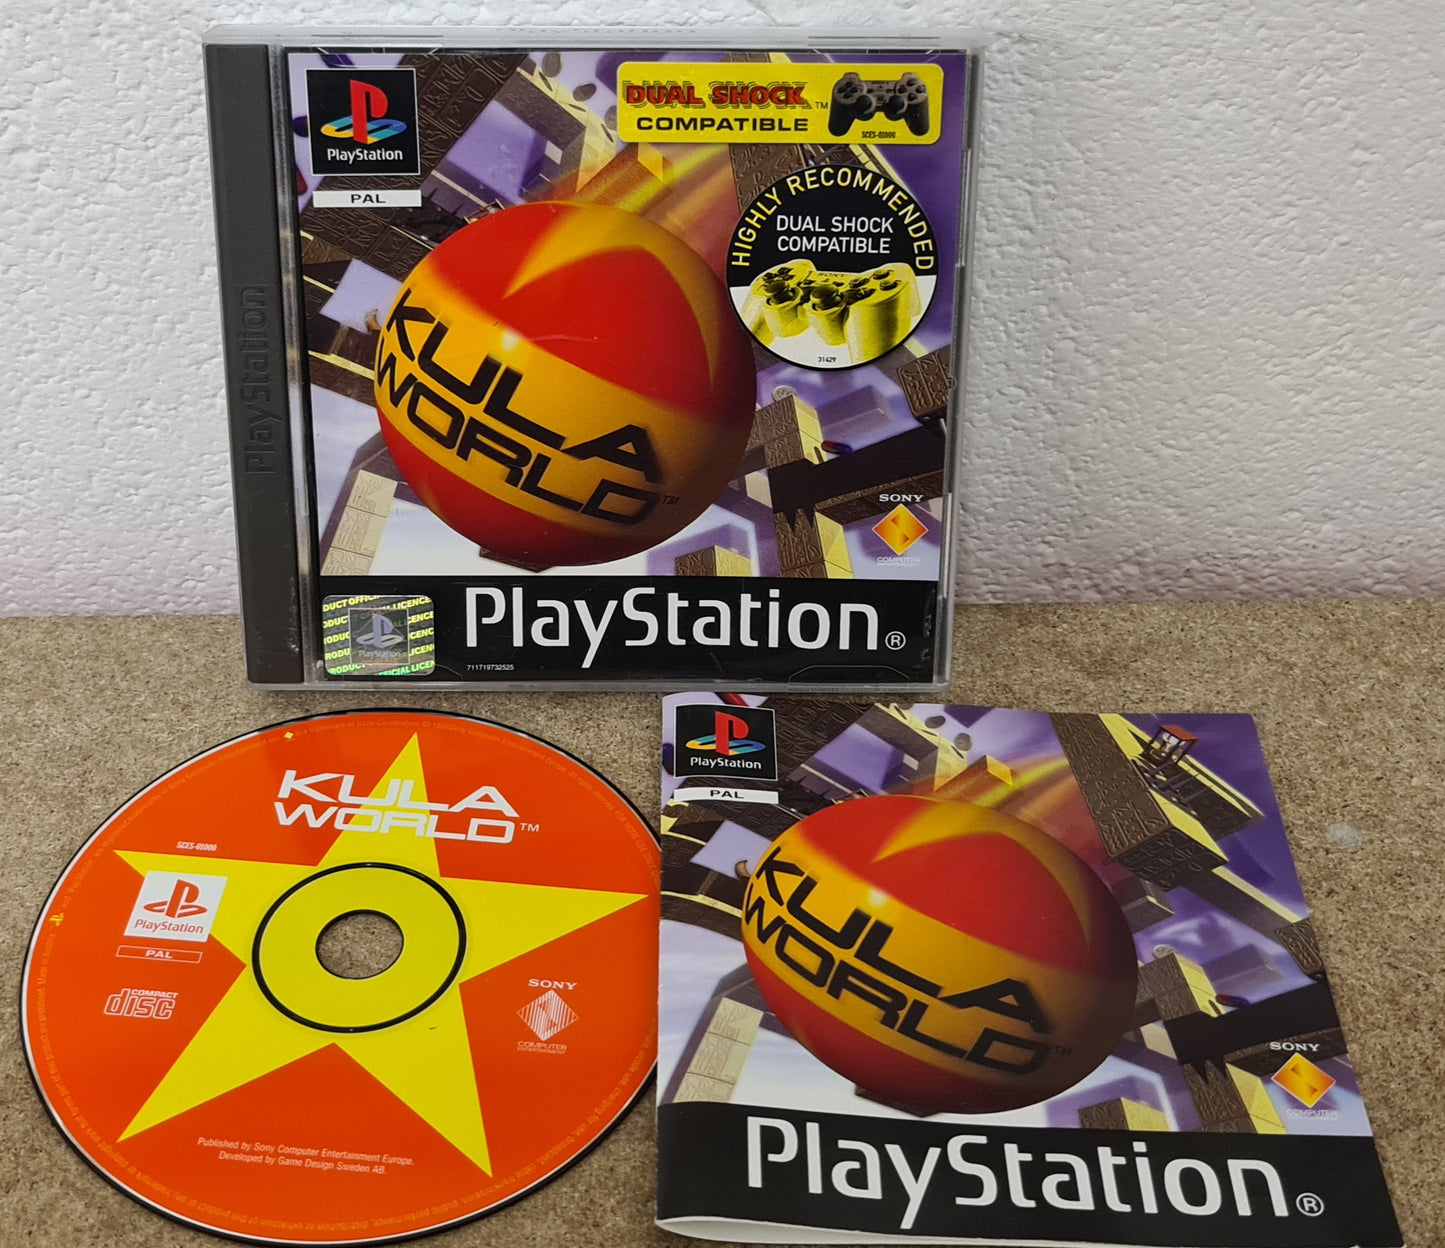 Kula World AKA Roll Away Sony Playstation 1 (PS1) Game